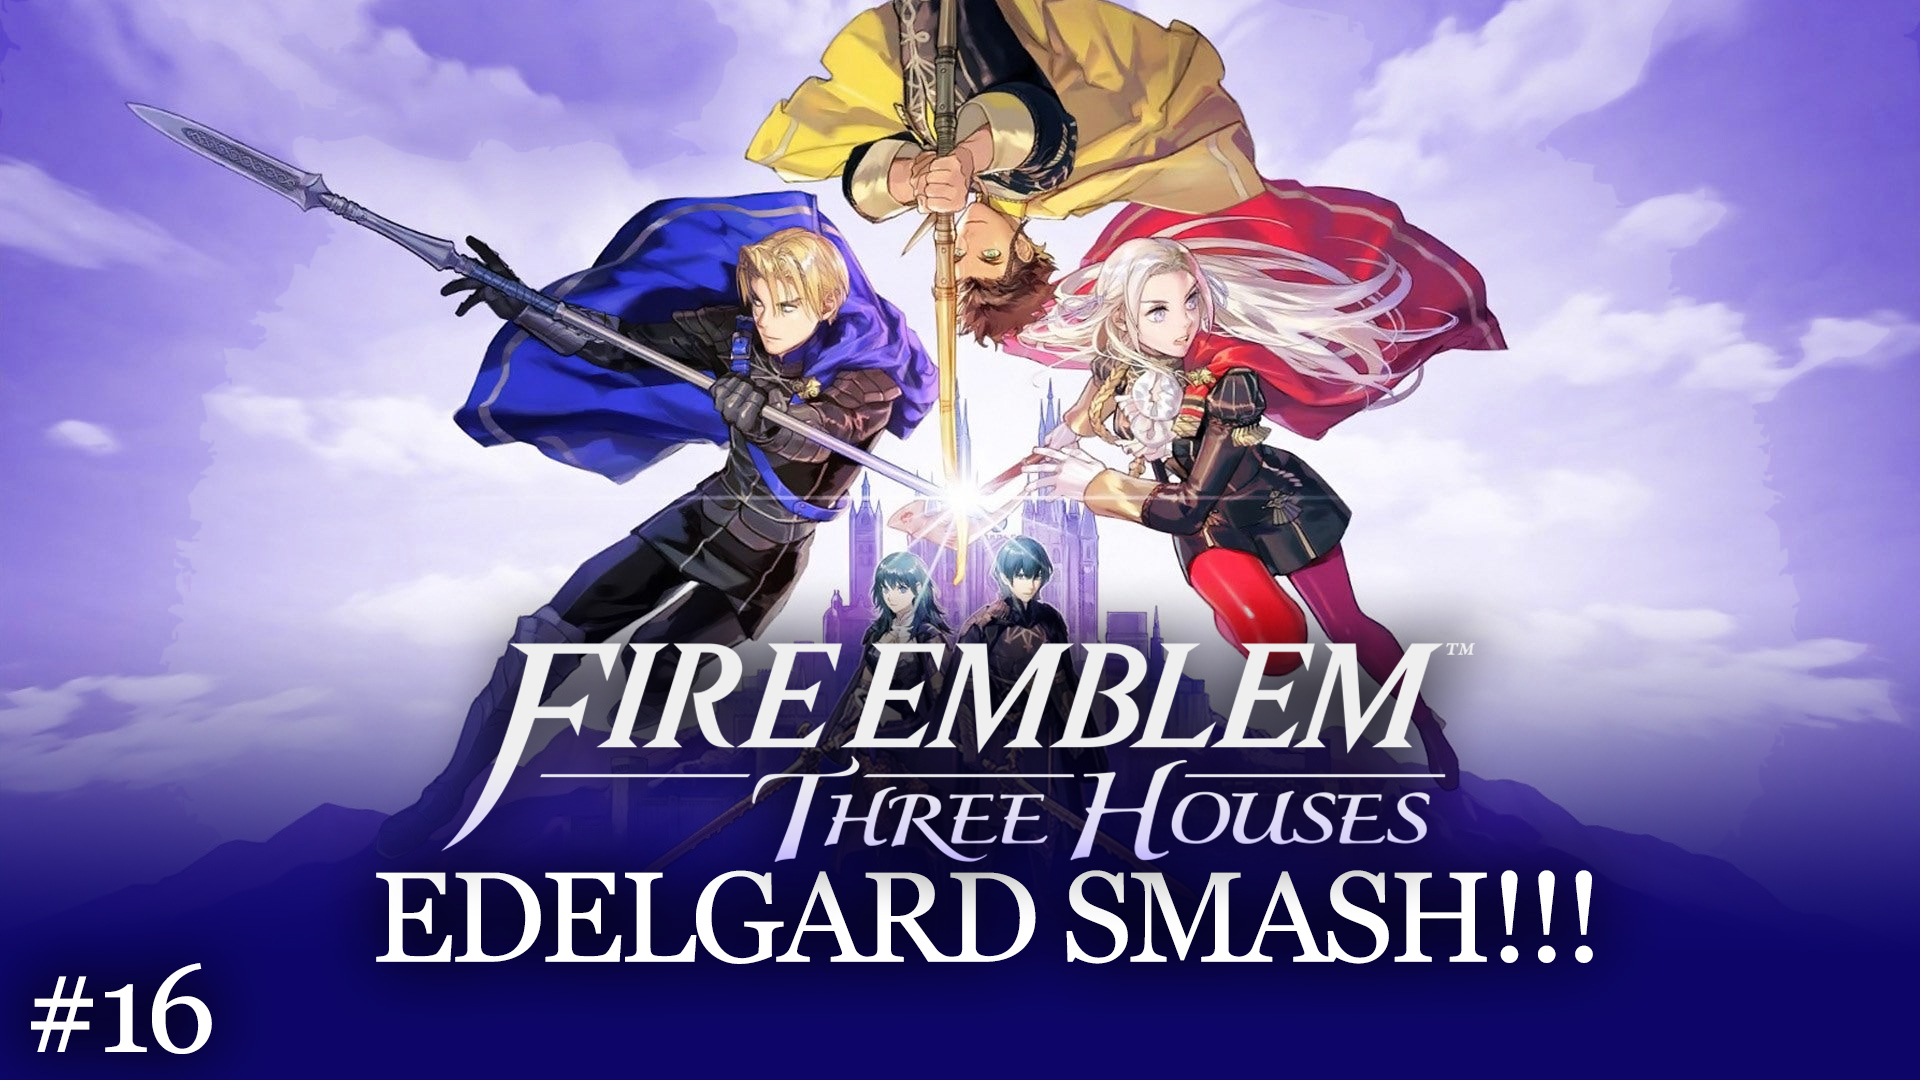 Serie Fire Emblem Three Houses #16 – Edelgard Smash!!!